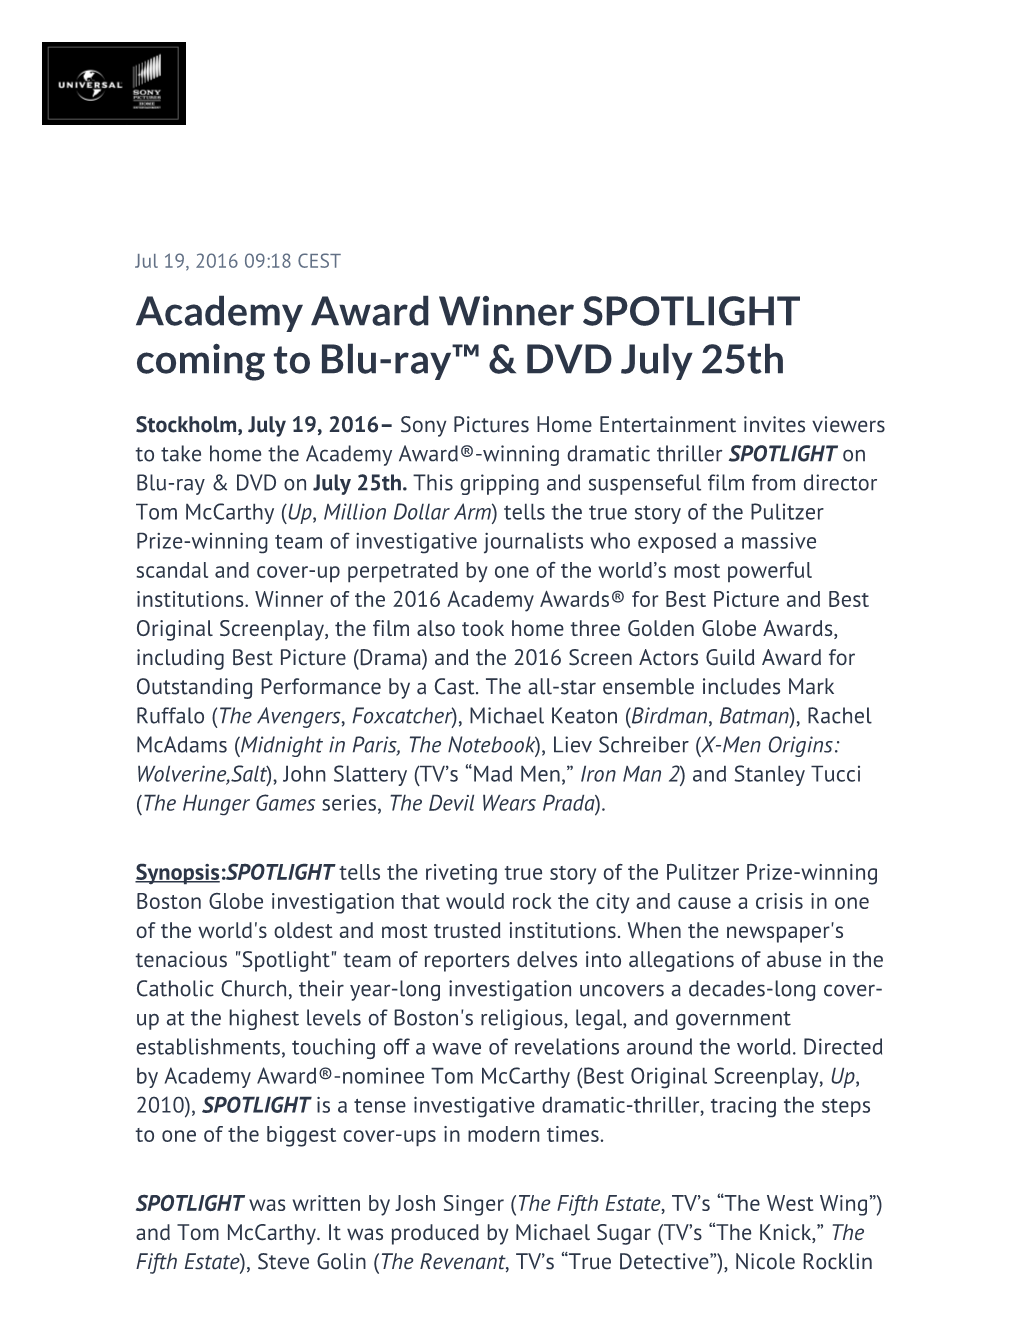 Academy Award Winner SPOTLIGHT Coming to Blu-Ray™ & DVD July 25Th